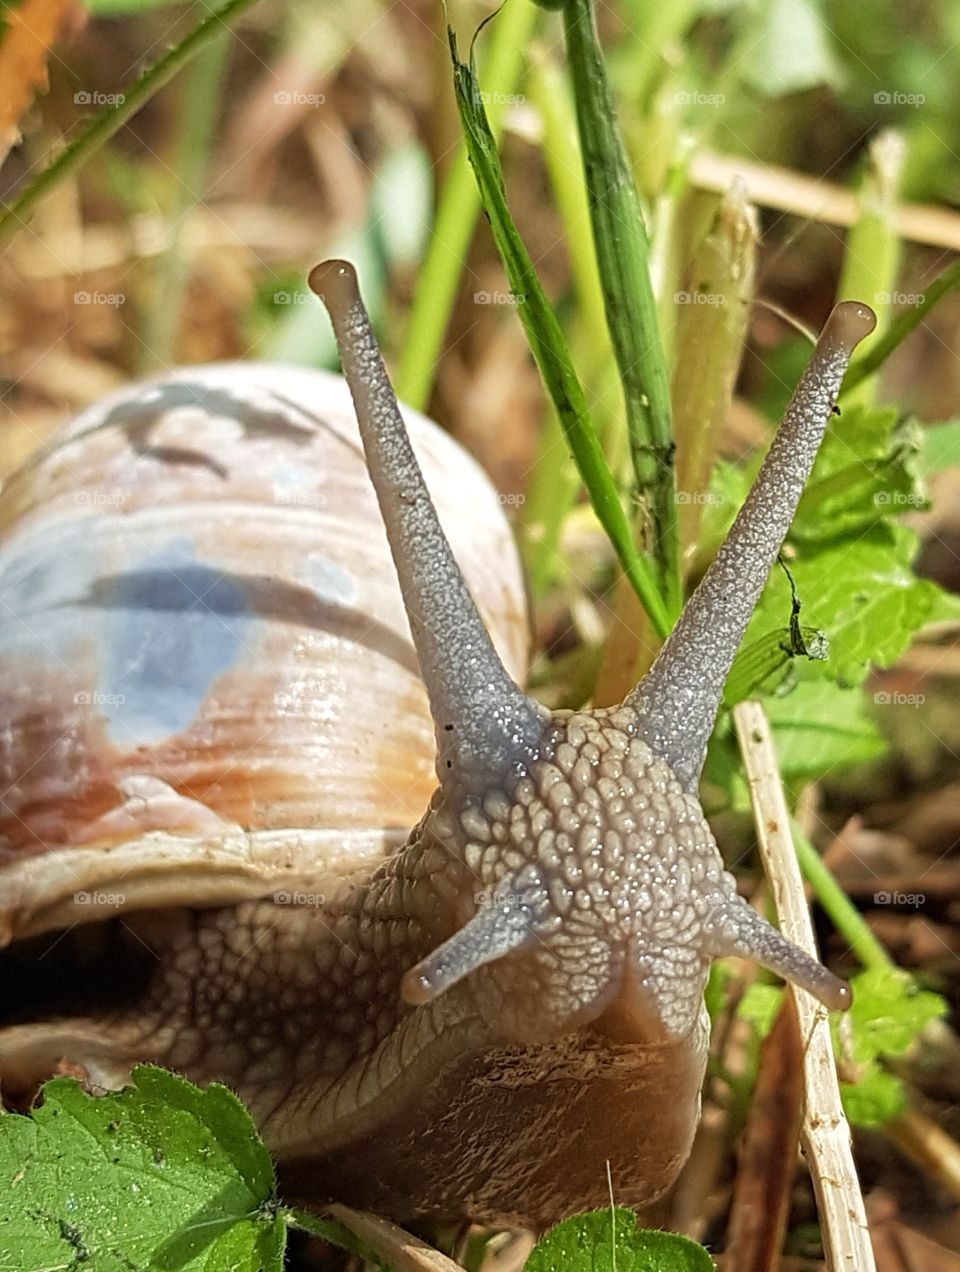 Snail in the garden. Helix Pomatia